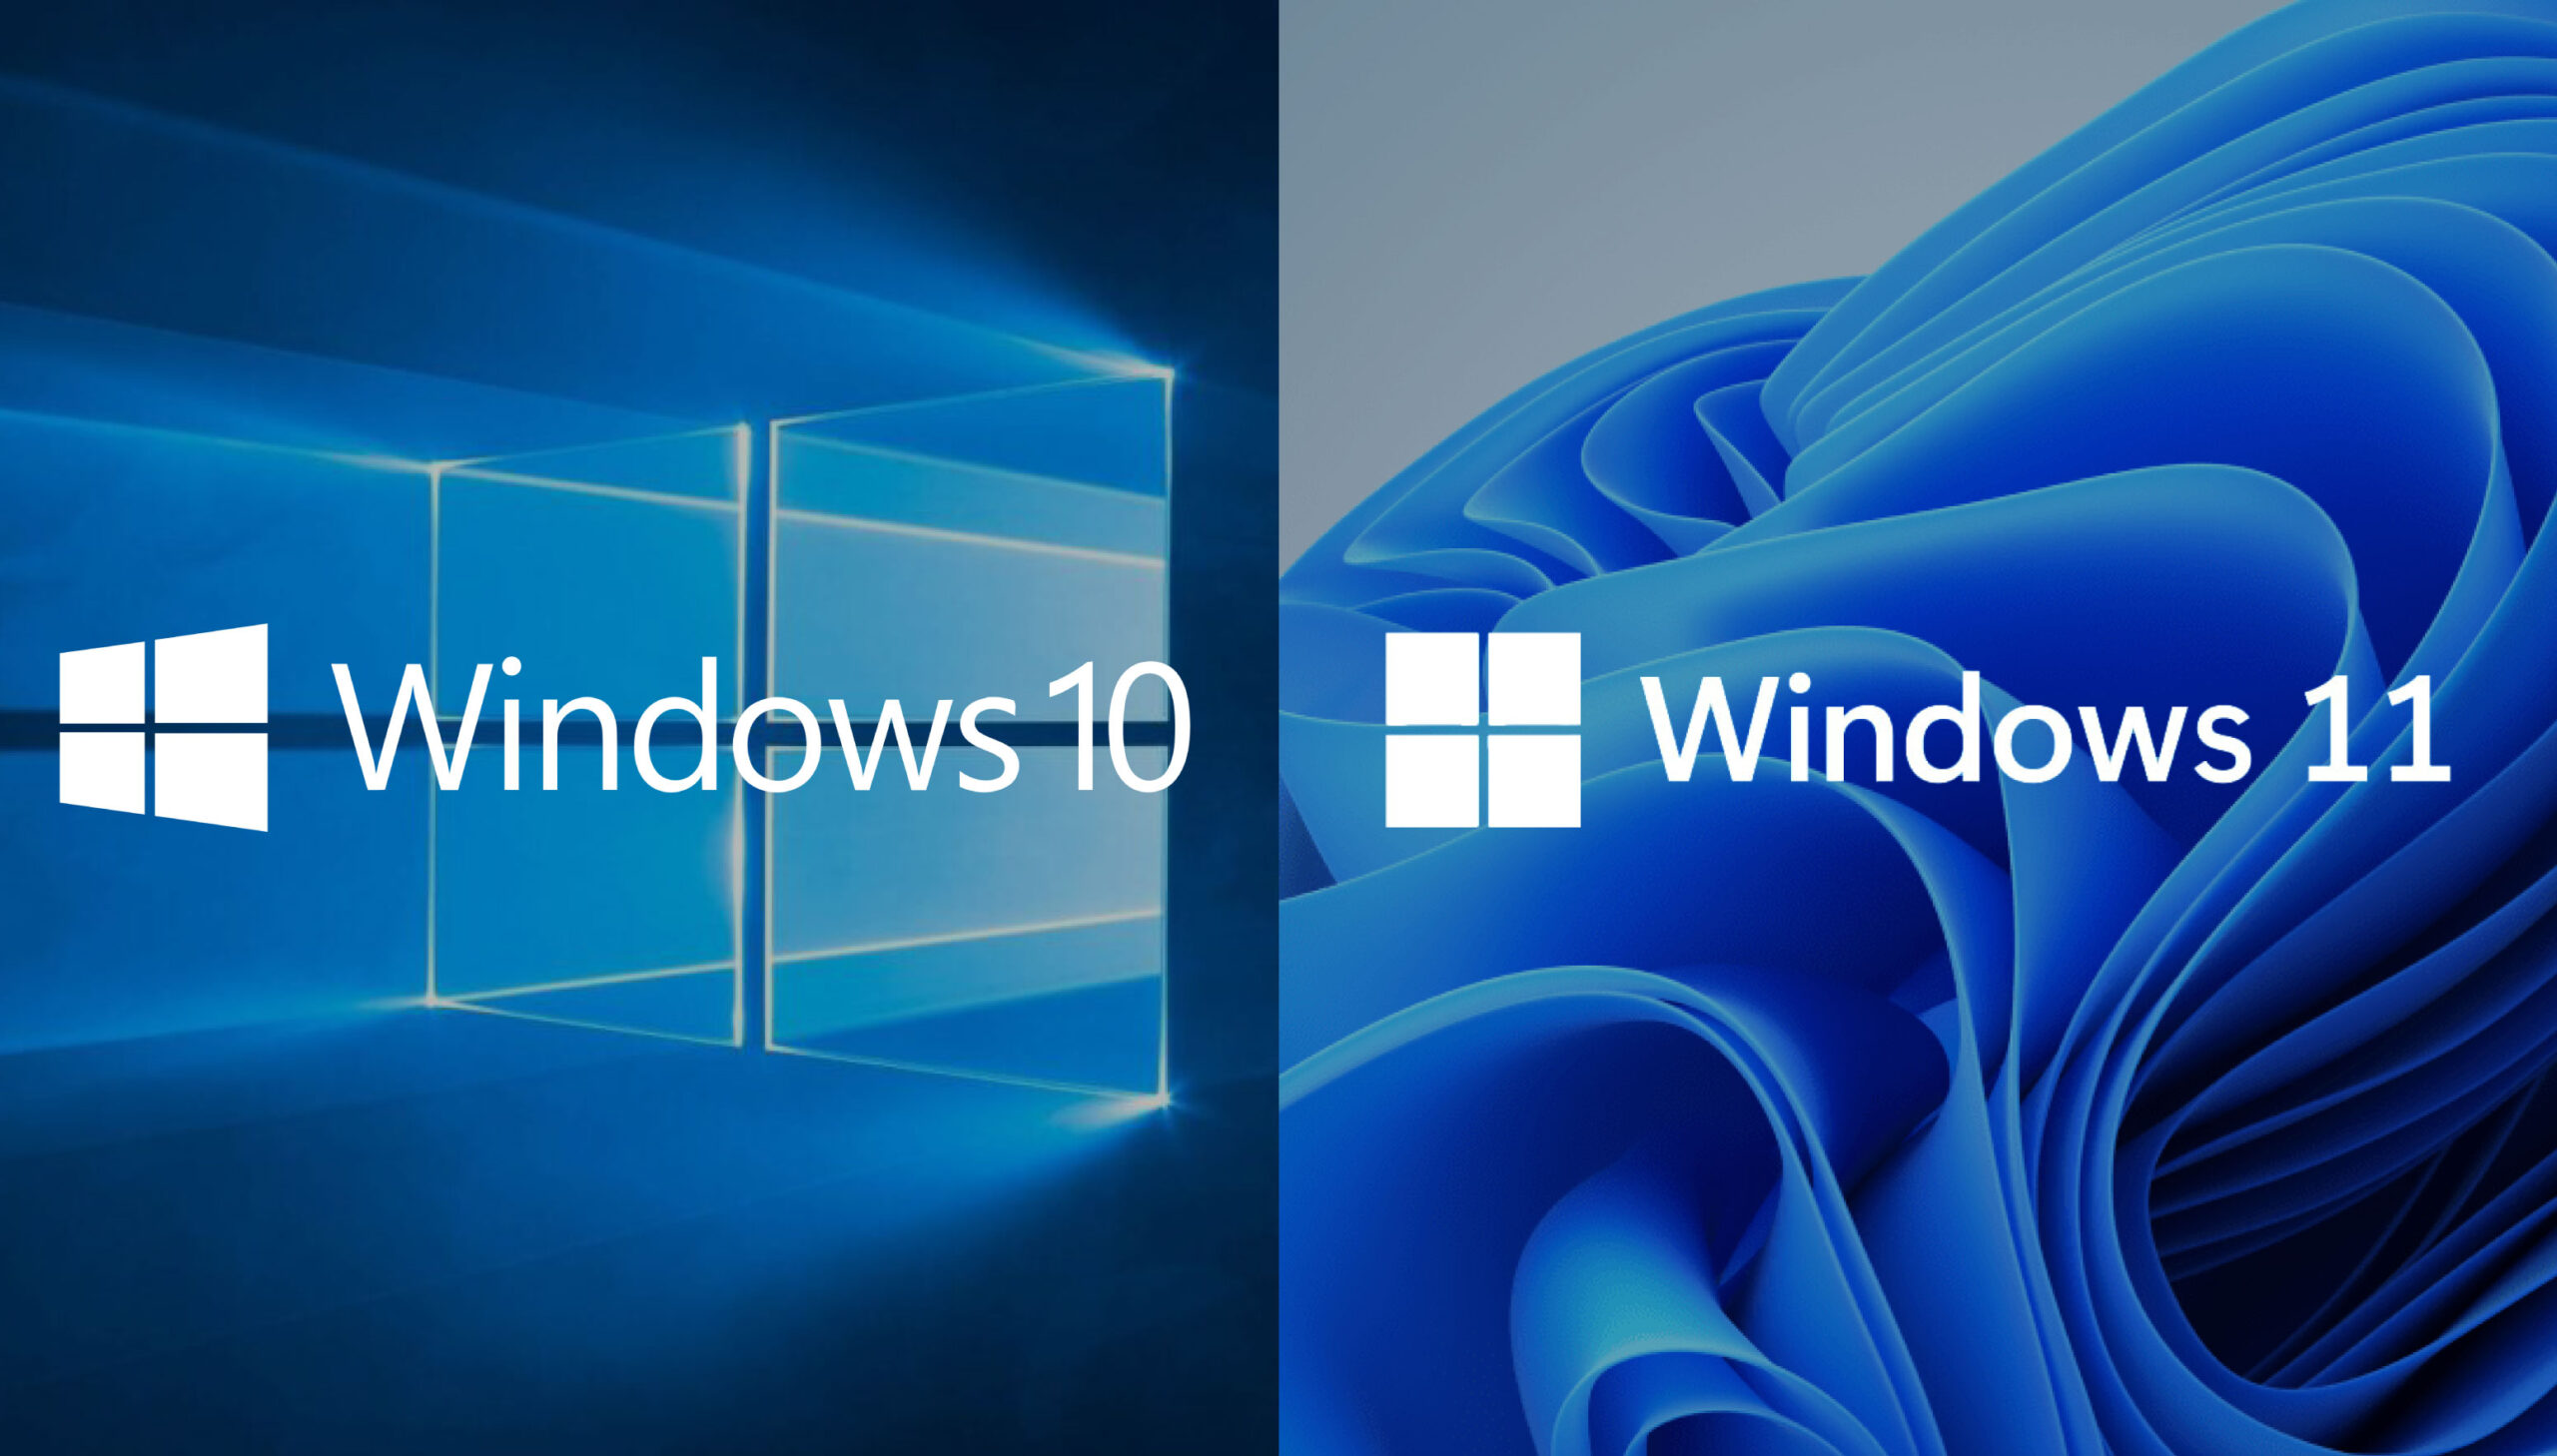 Is Windows 11 better than Windows 10